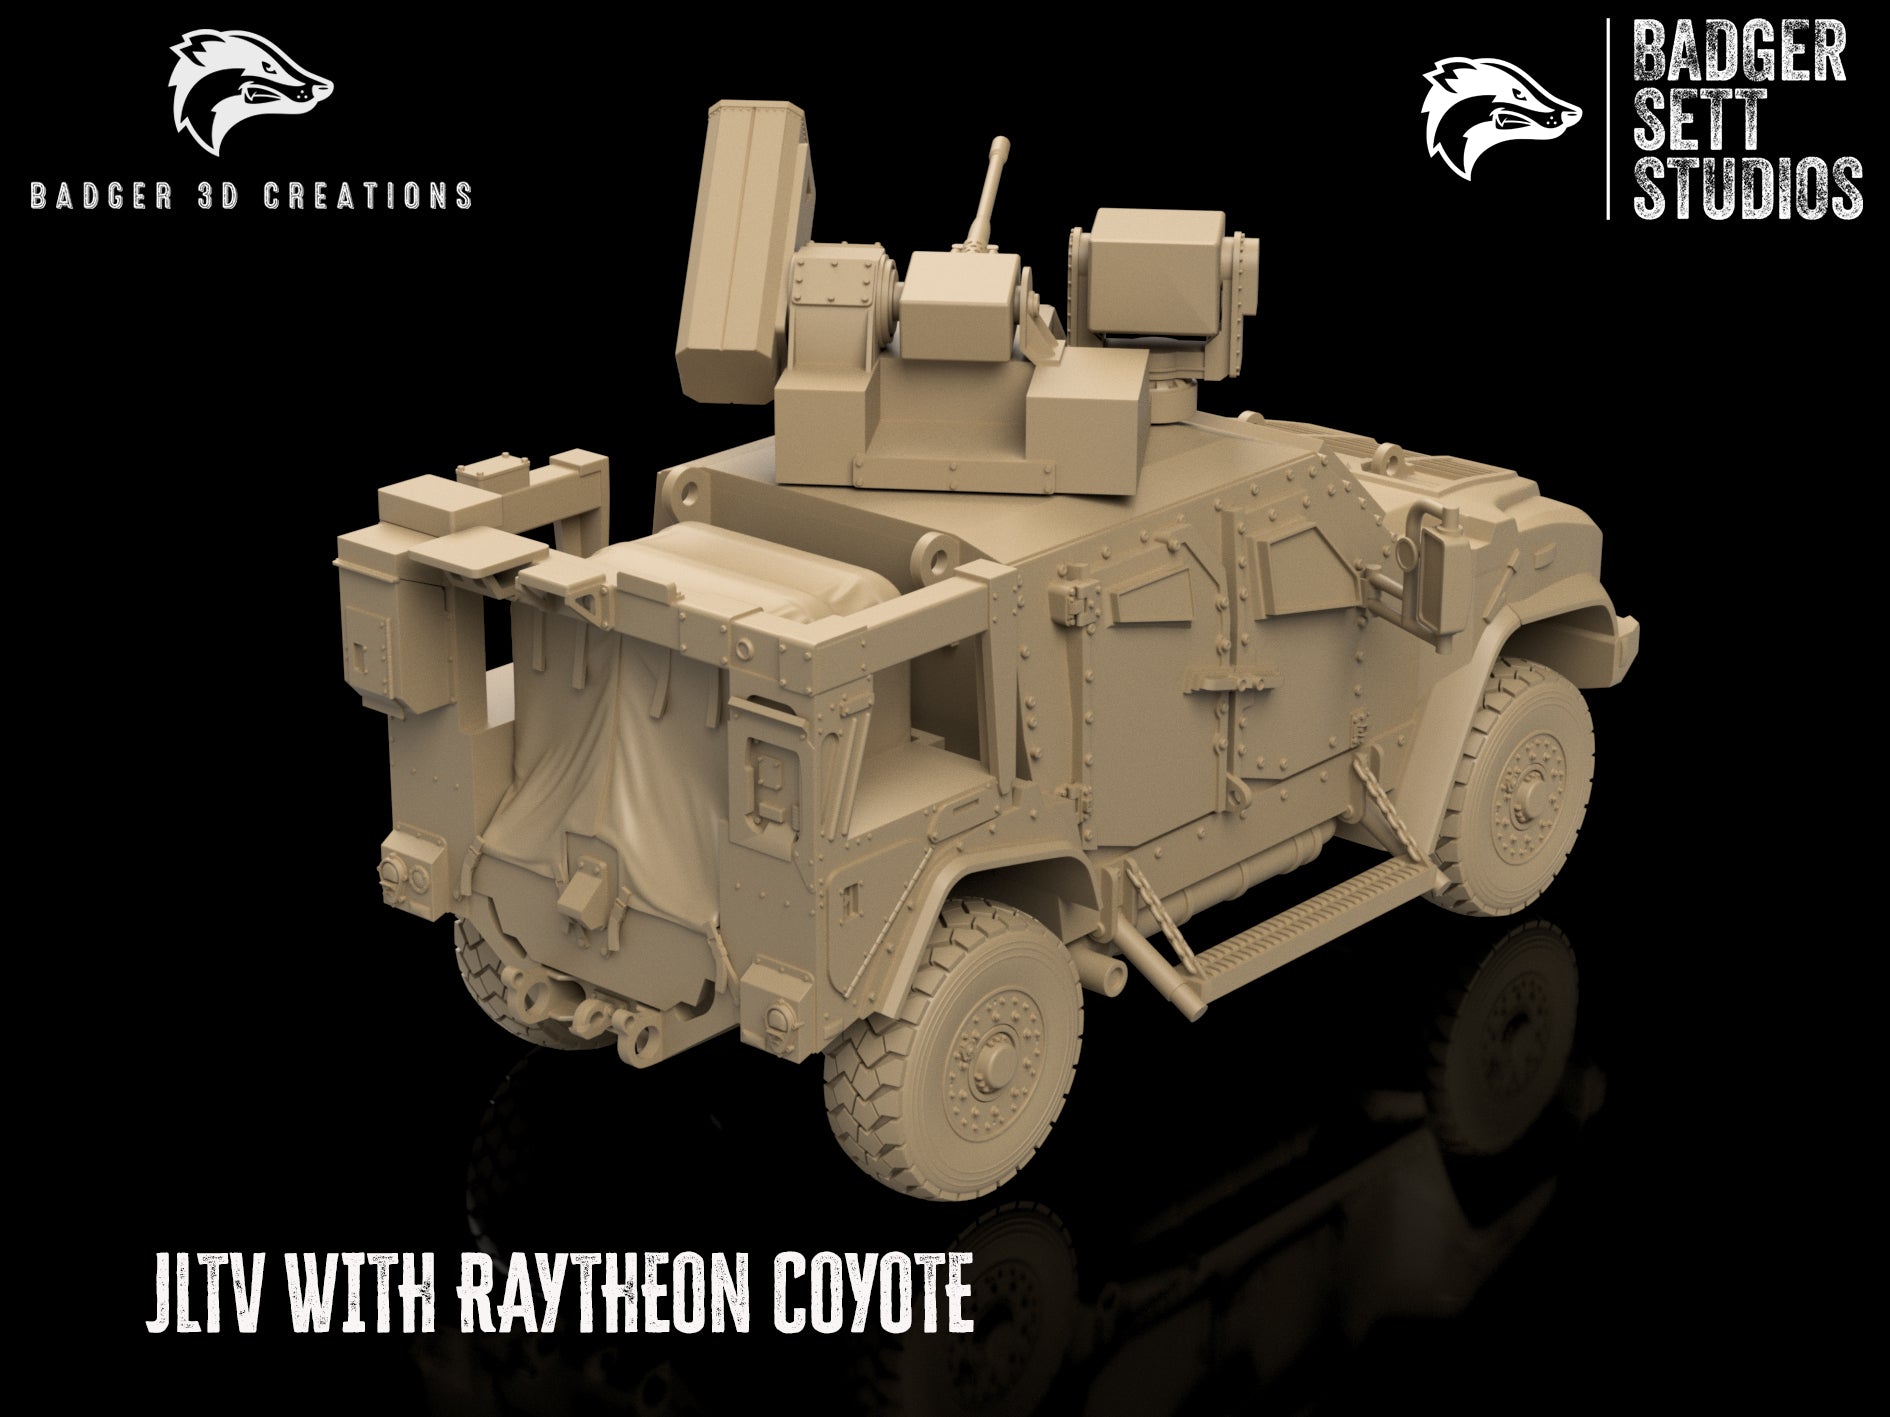 JLTV with Raytheon Coyote